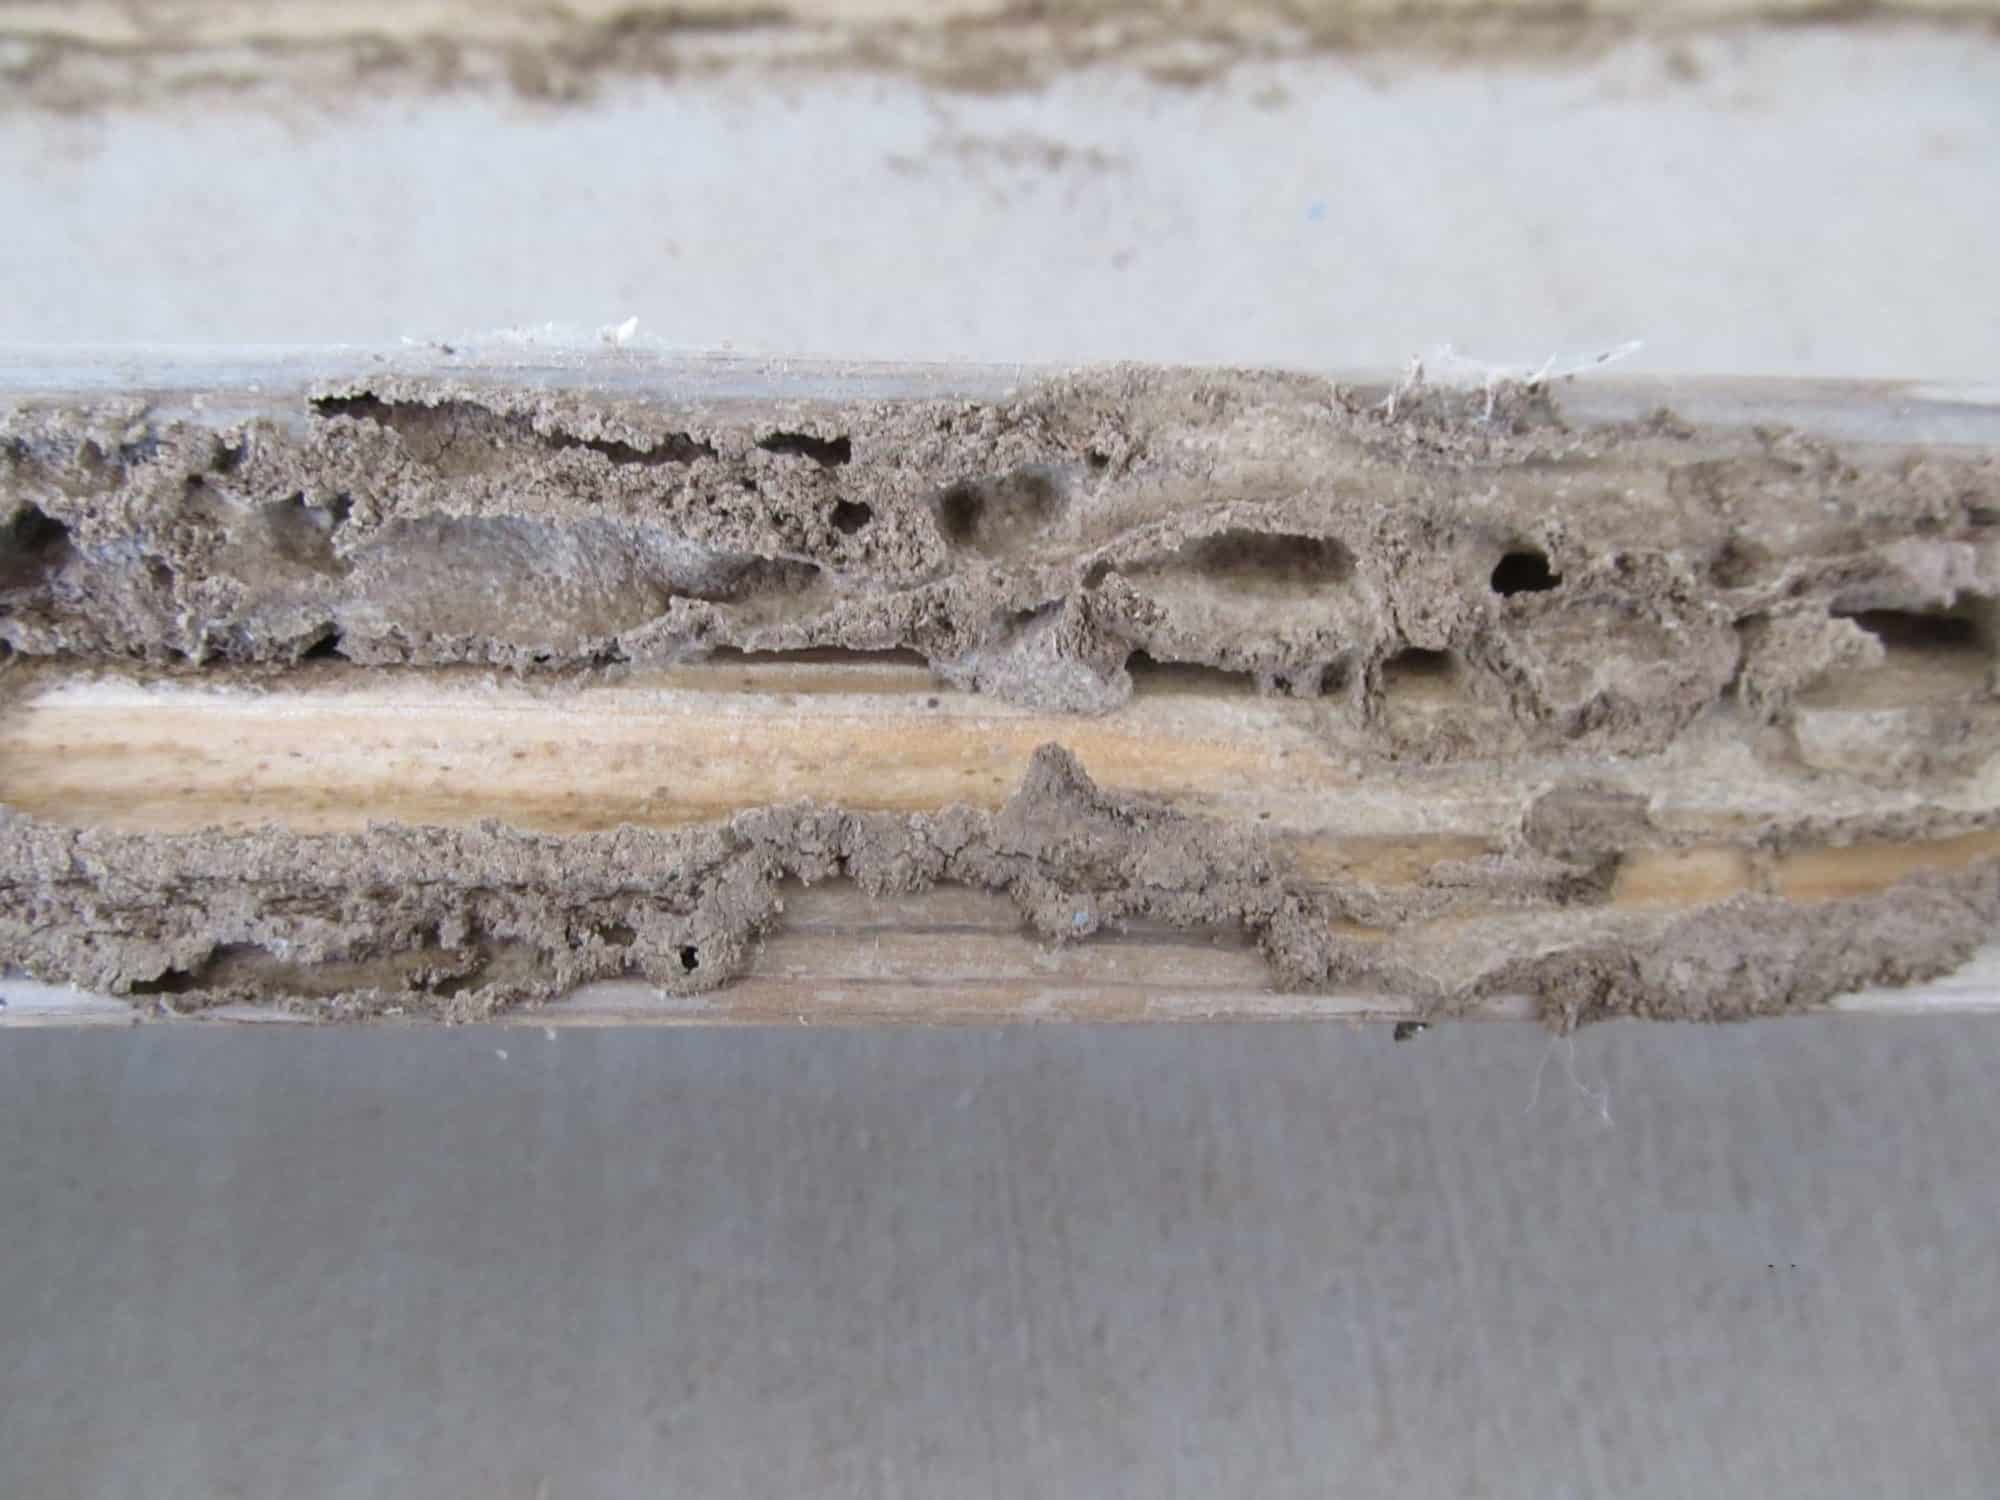 subterranean termites in arizona